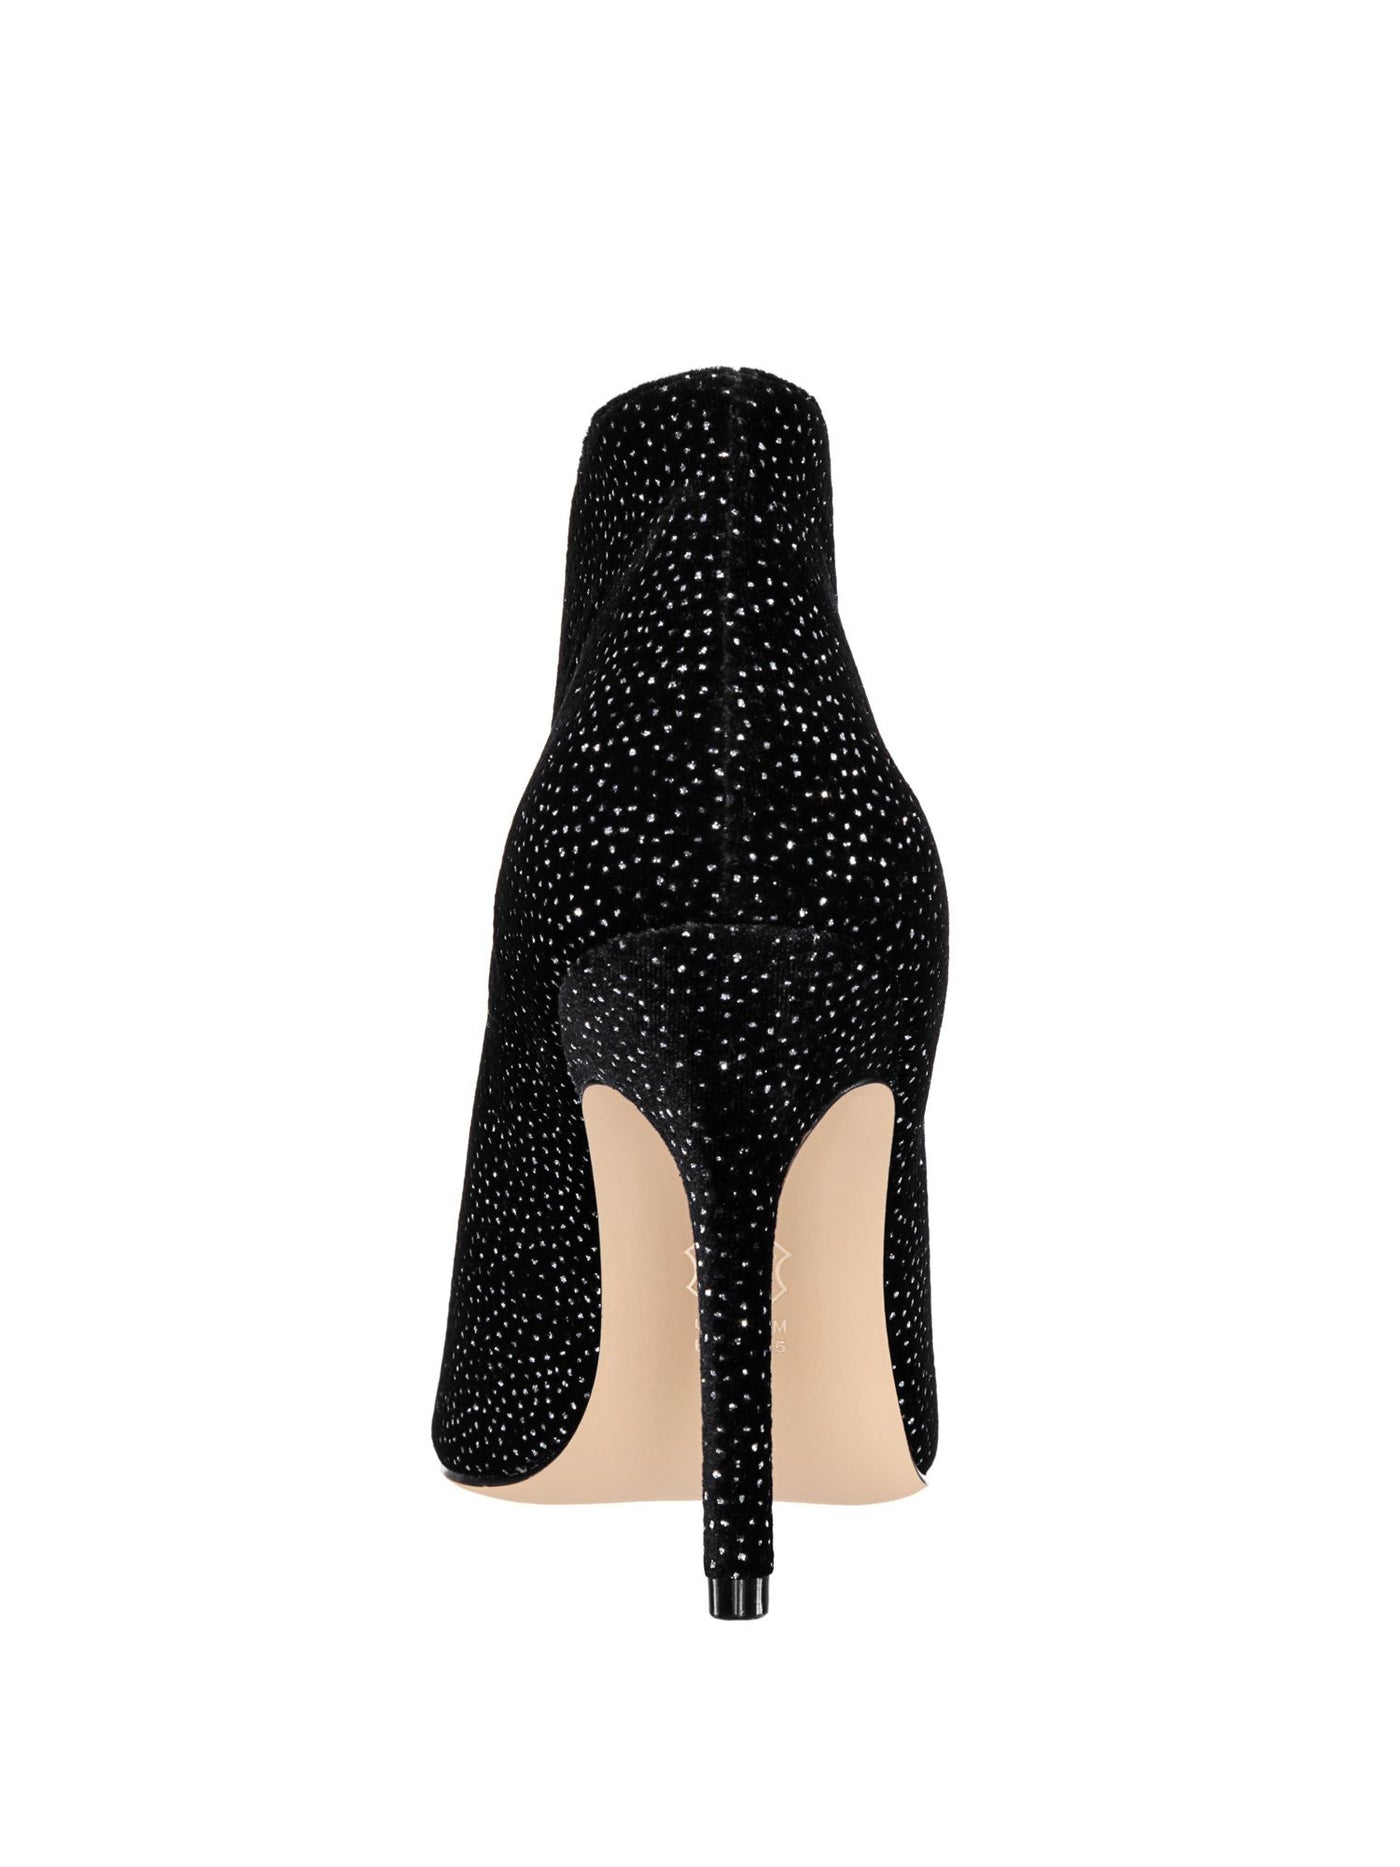 NINA Womens Black V-Cut Vamp Glitter Comfort Merima Peep Toe Stiletto Zip-Up Dress Booties 9.5 M